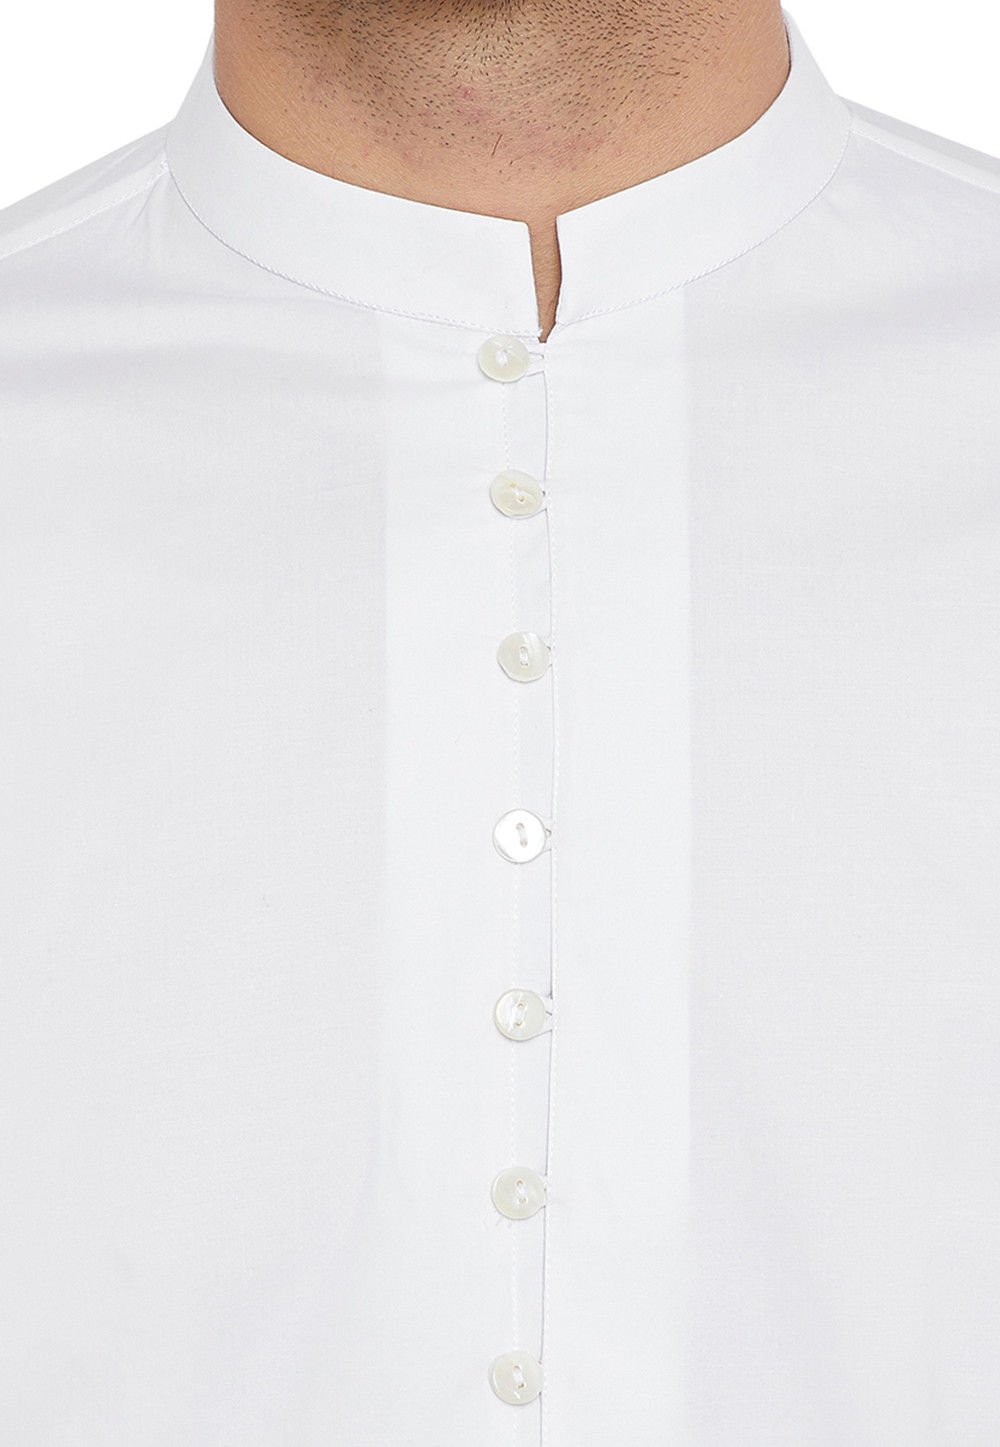 Buy Solid Color Cotton Short Kurta in White Online : MEE945 - Utsav Fashion